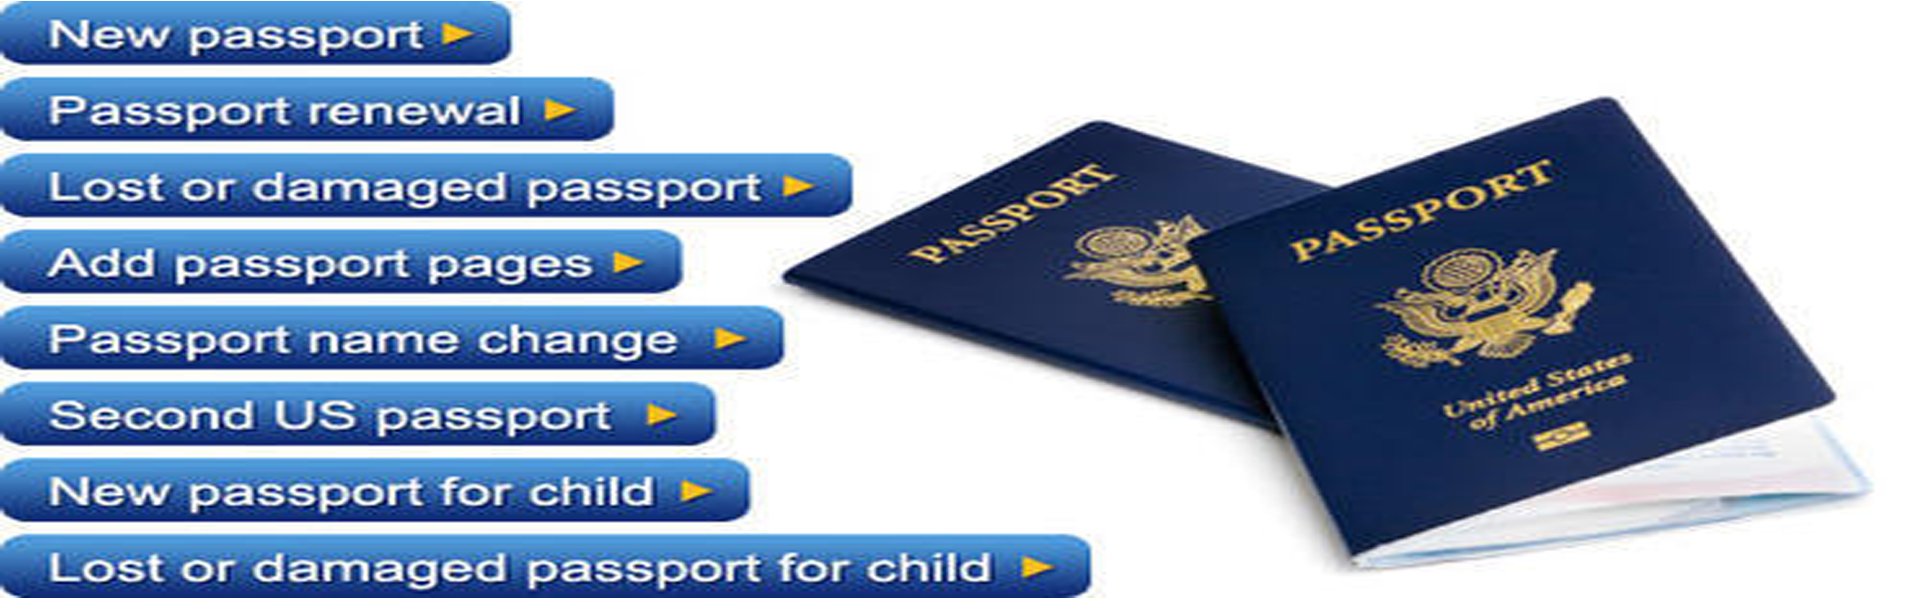 tatkal passport renewal